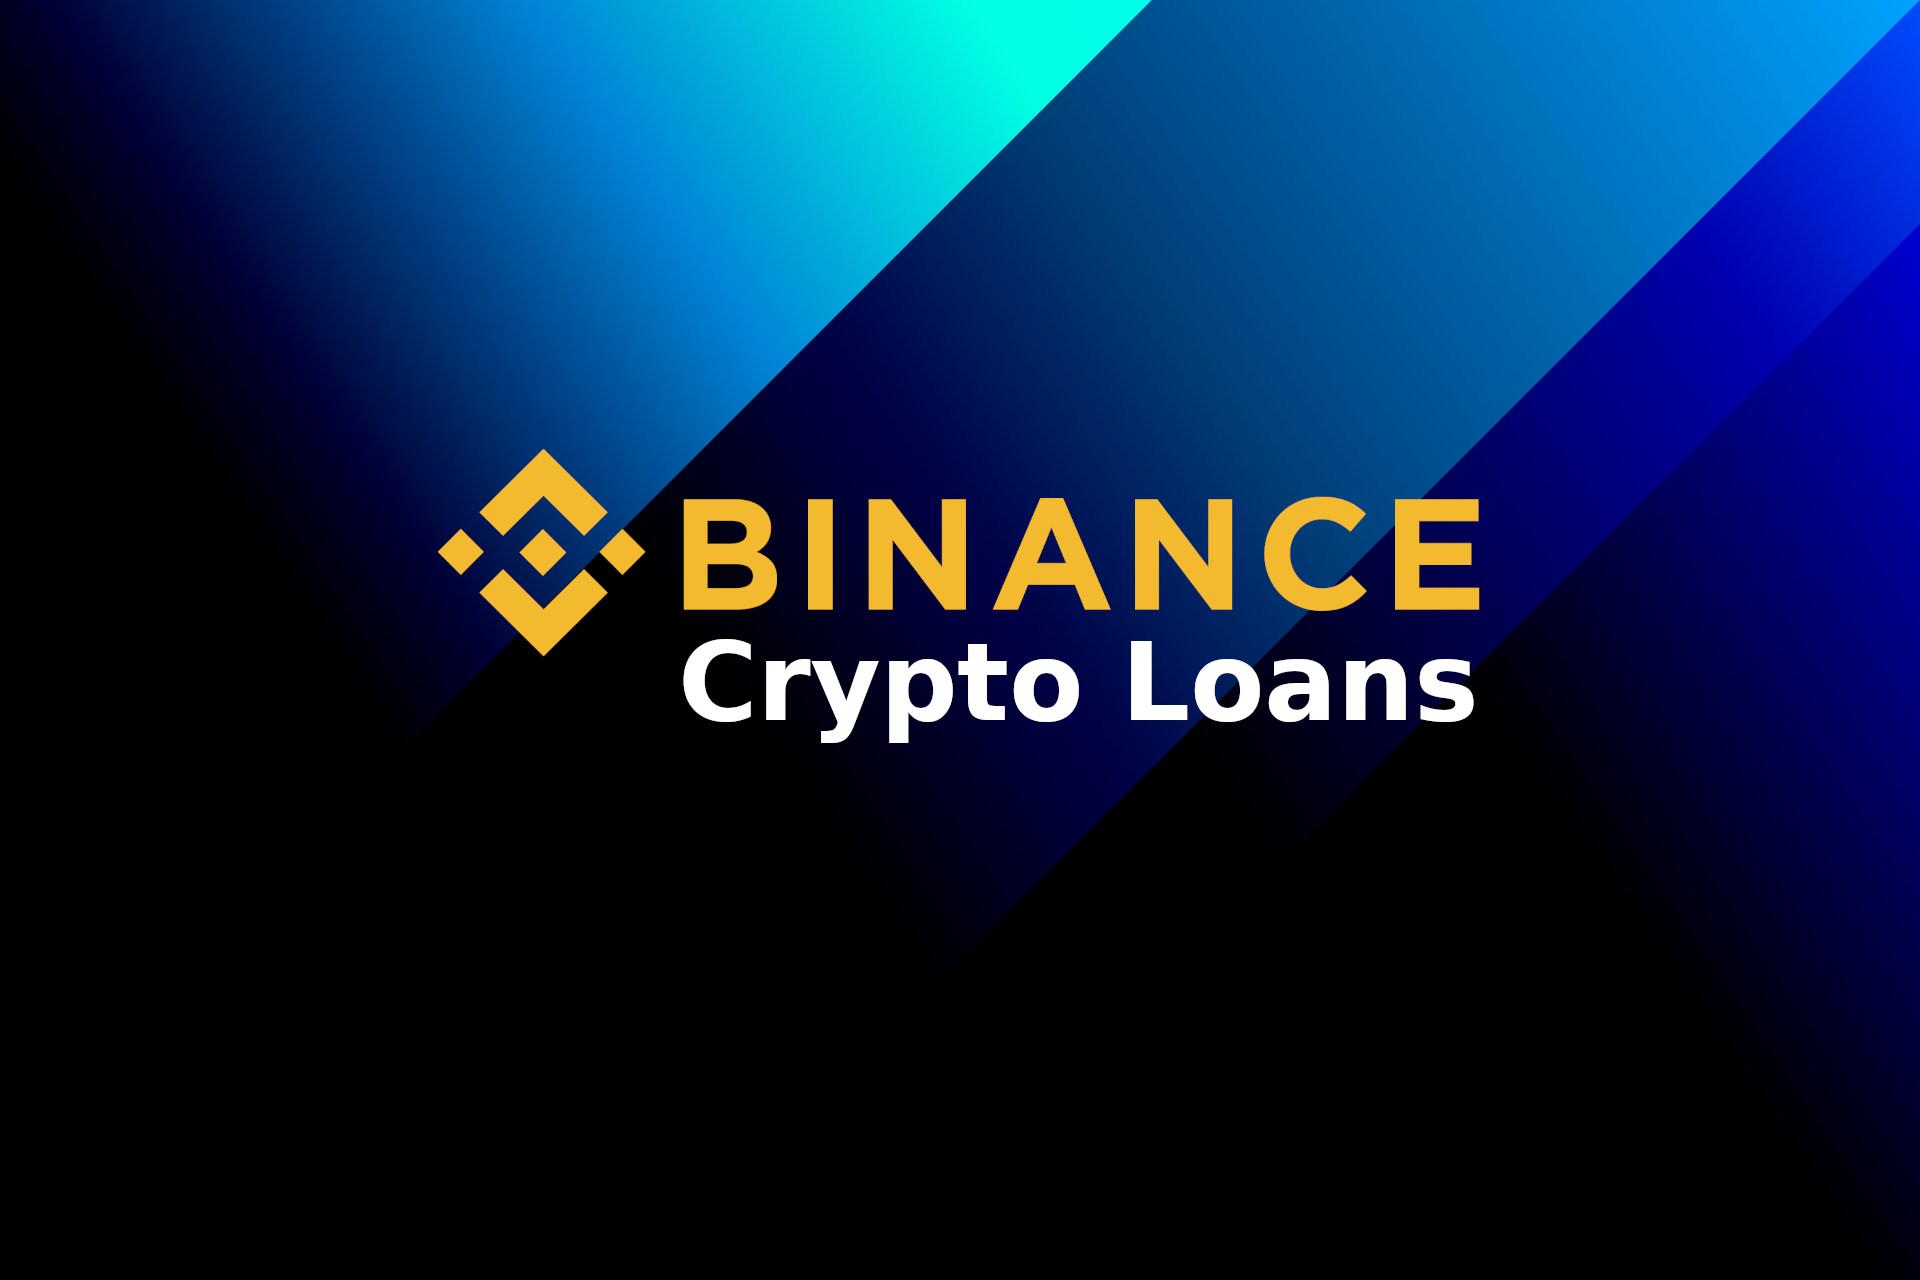 Binance Crypto Loans cover image